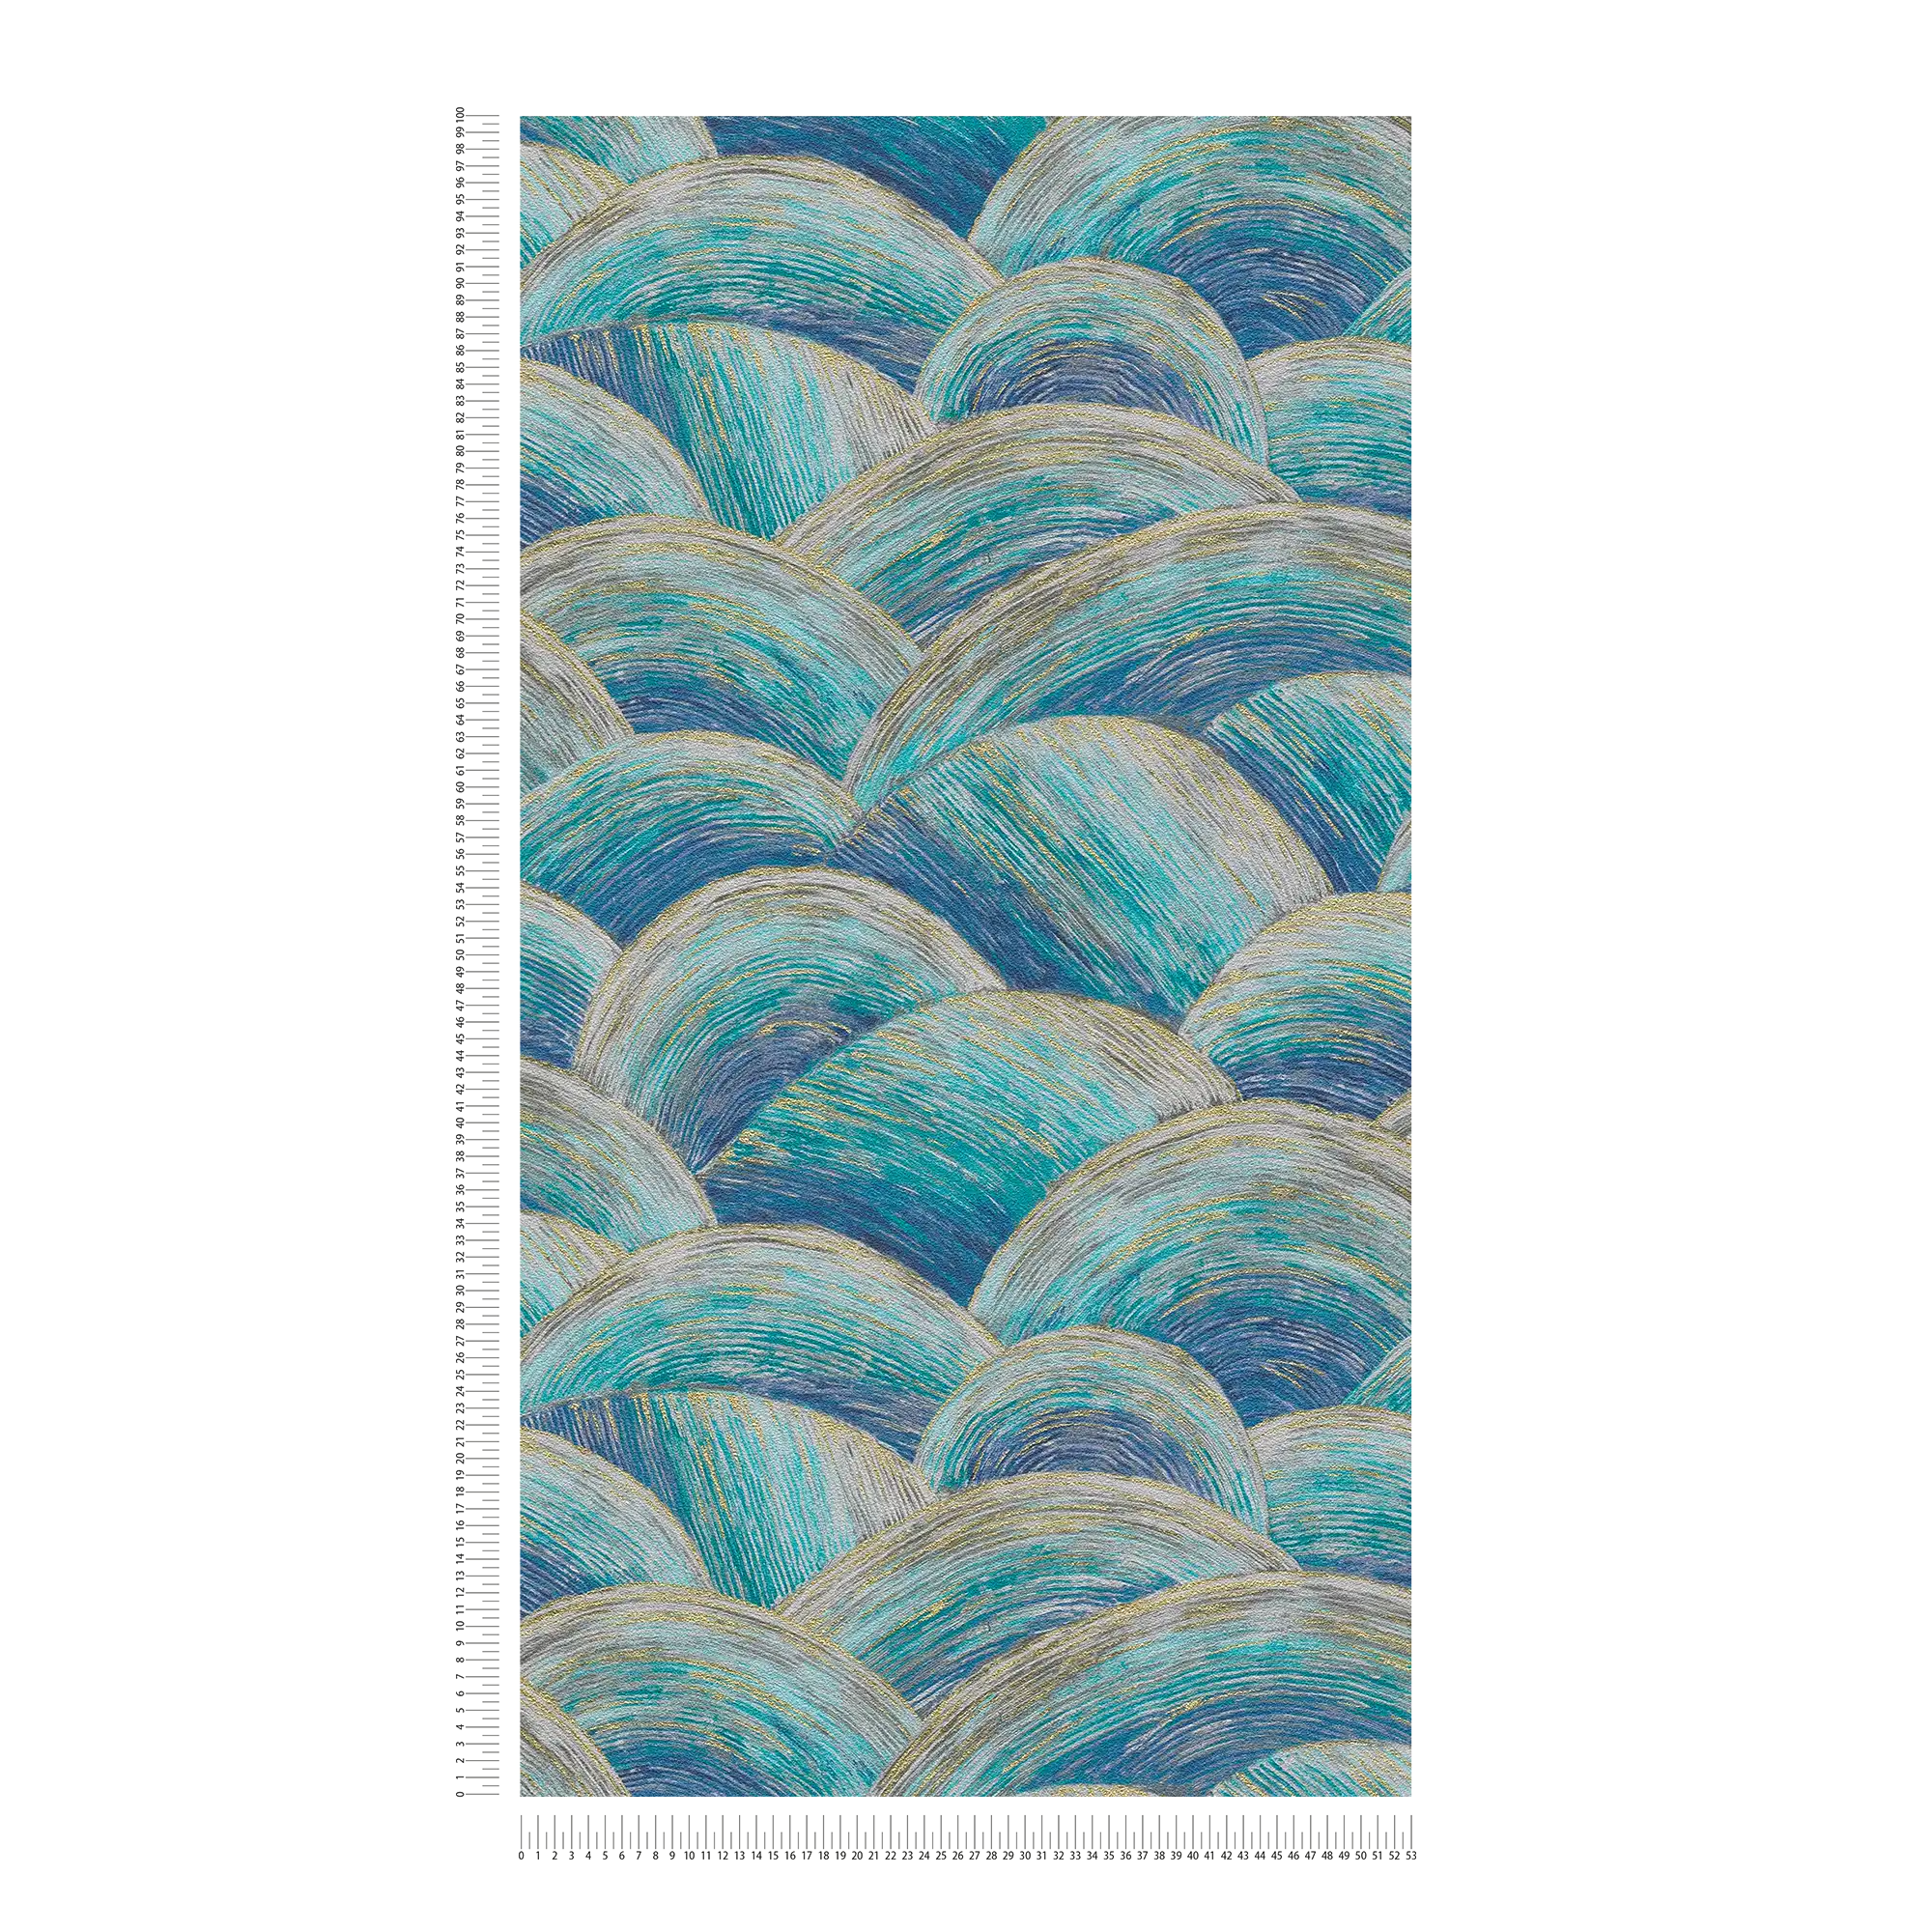             Abstract vliesbehang met golfpatroon & glanseffect - blauw, turquoise, goud
        